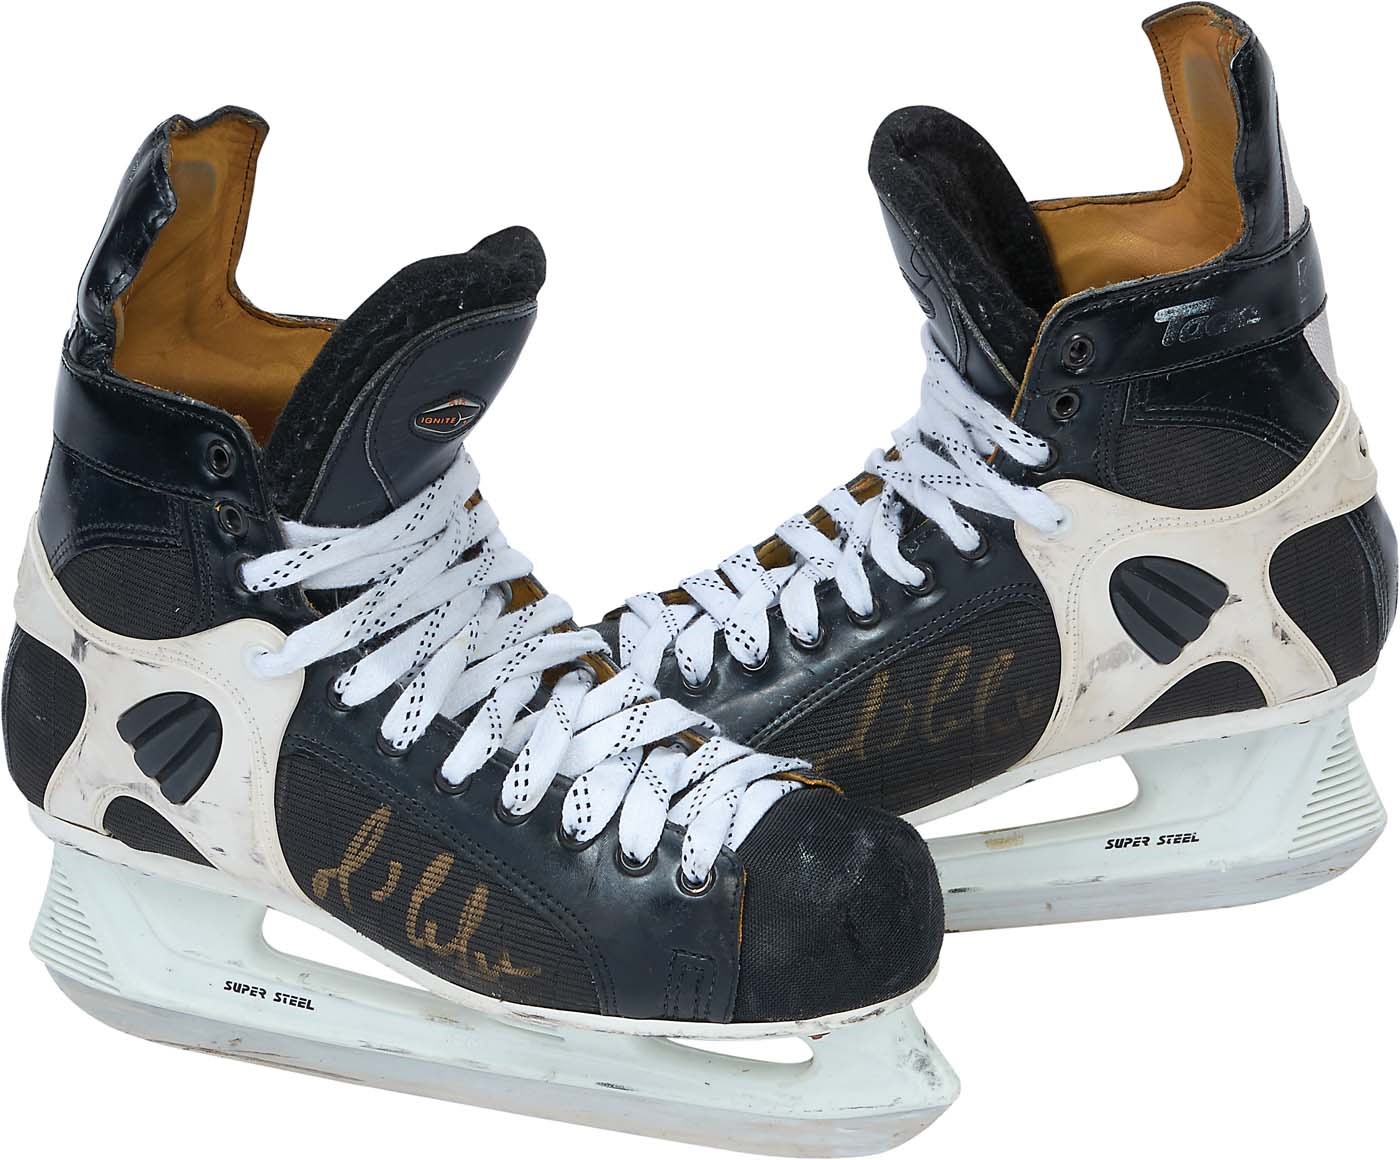 Hockey - Mario Lemieux 1,500 Career Point Game Worn Skates